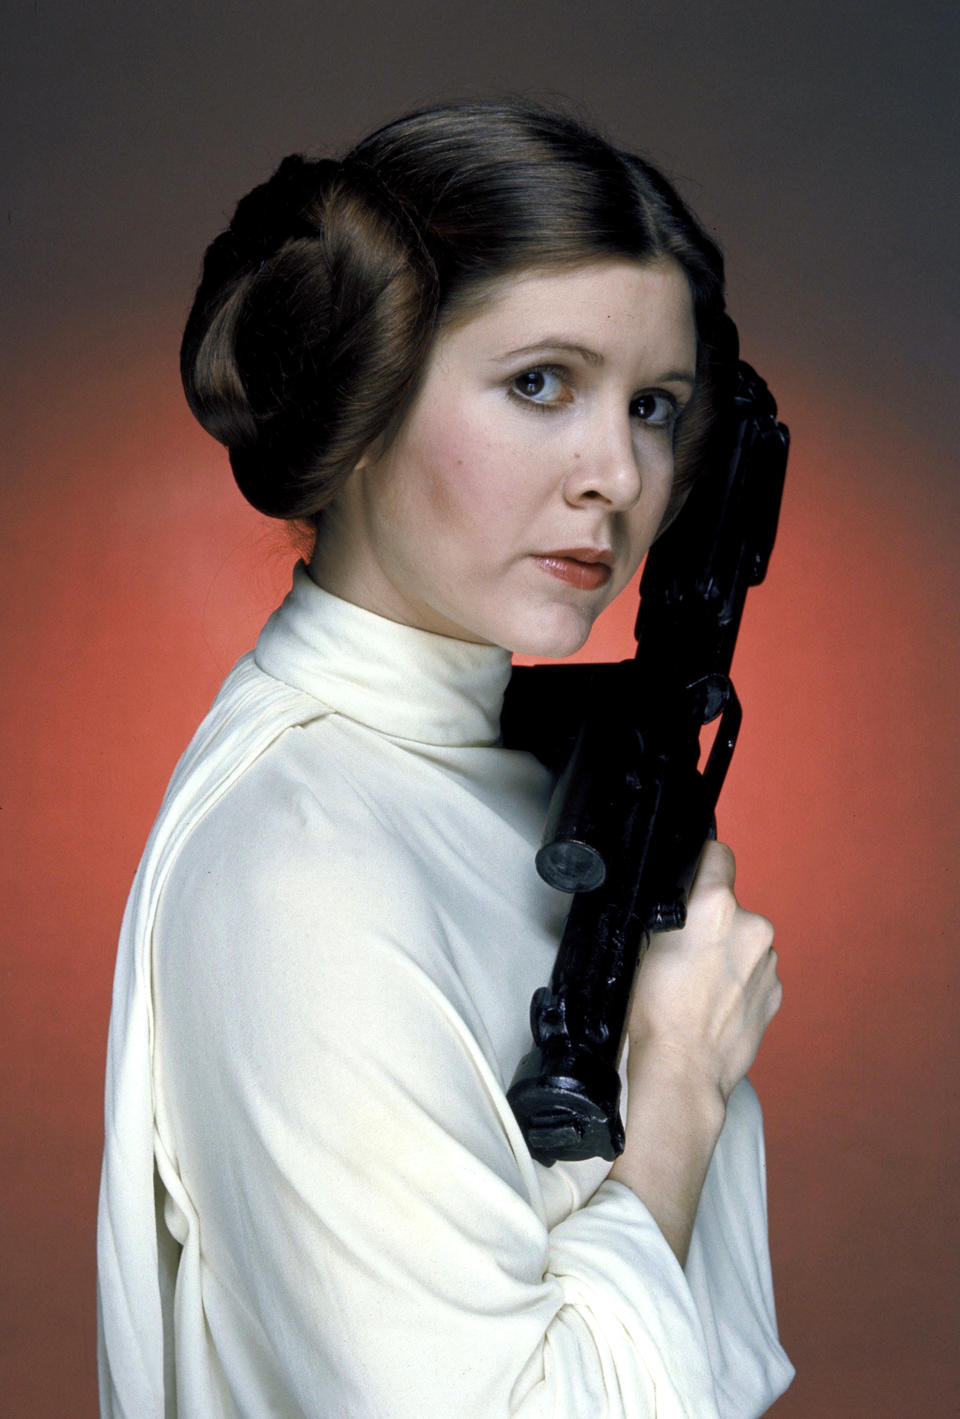 Princess Leia in "Star Wars"